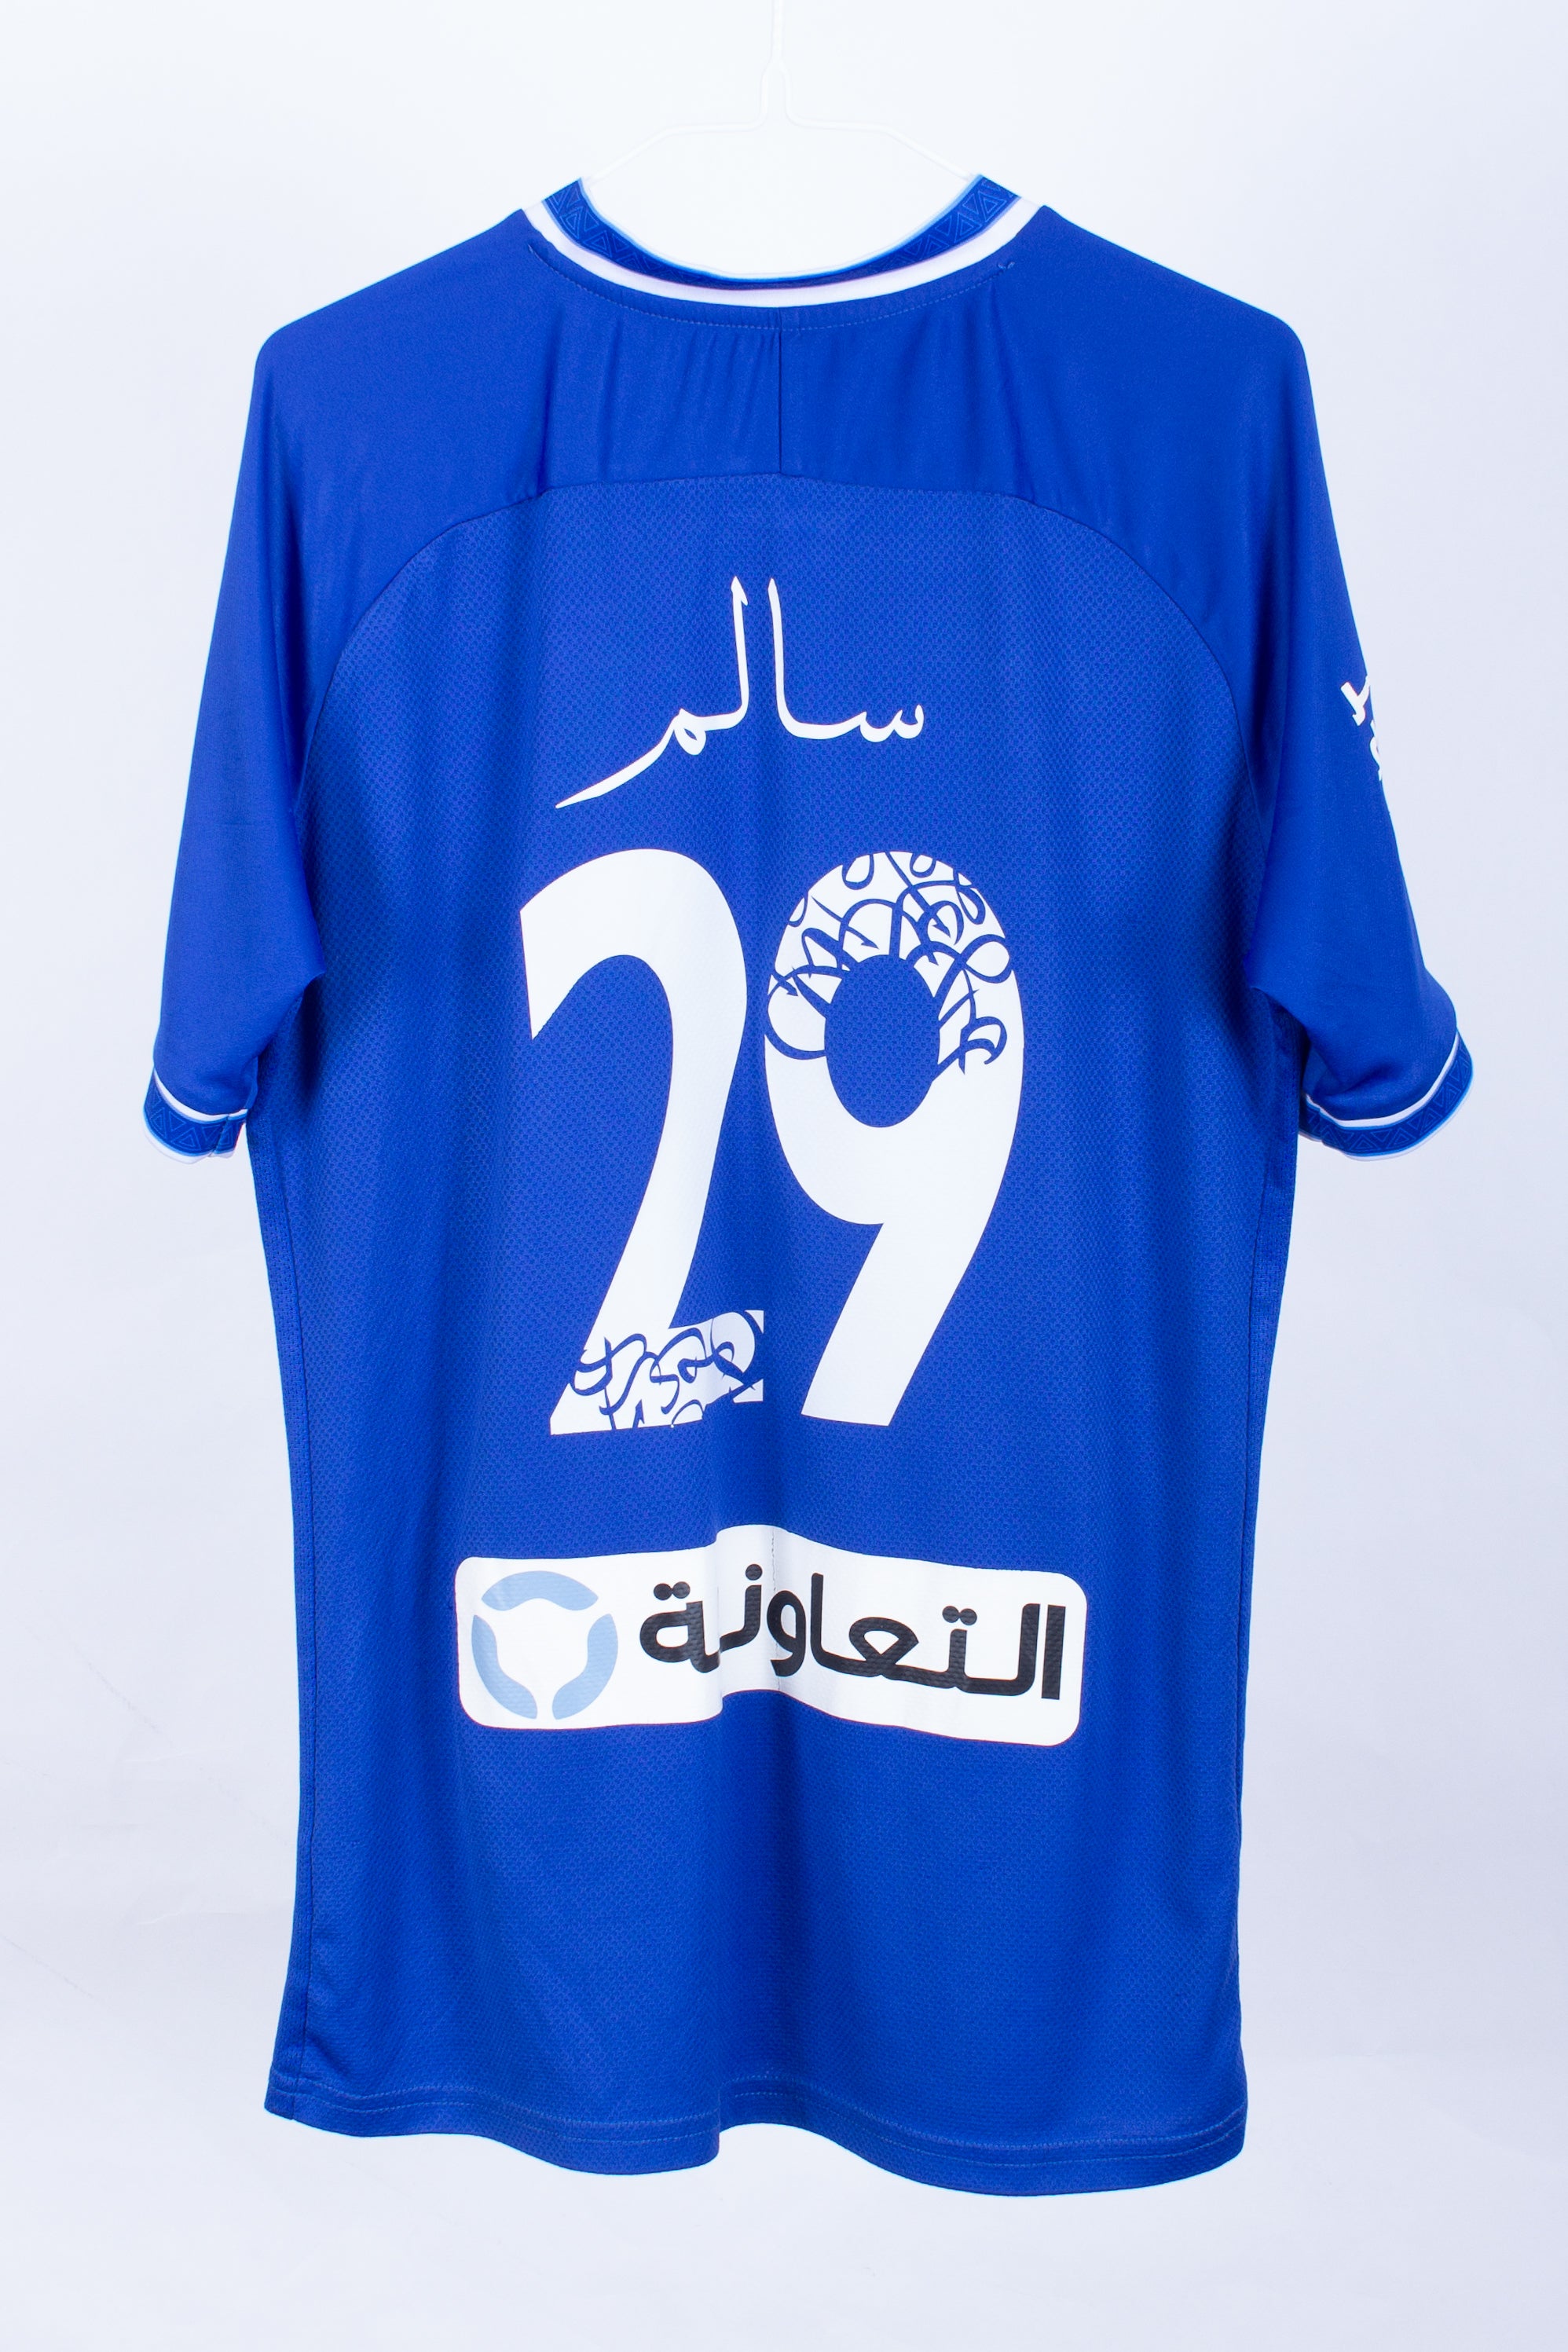 Al Hilal Football Shirt, Saudi Team Football Shirts, That Vintage Football Shirt